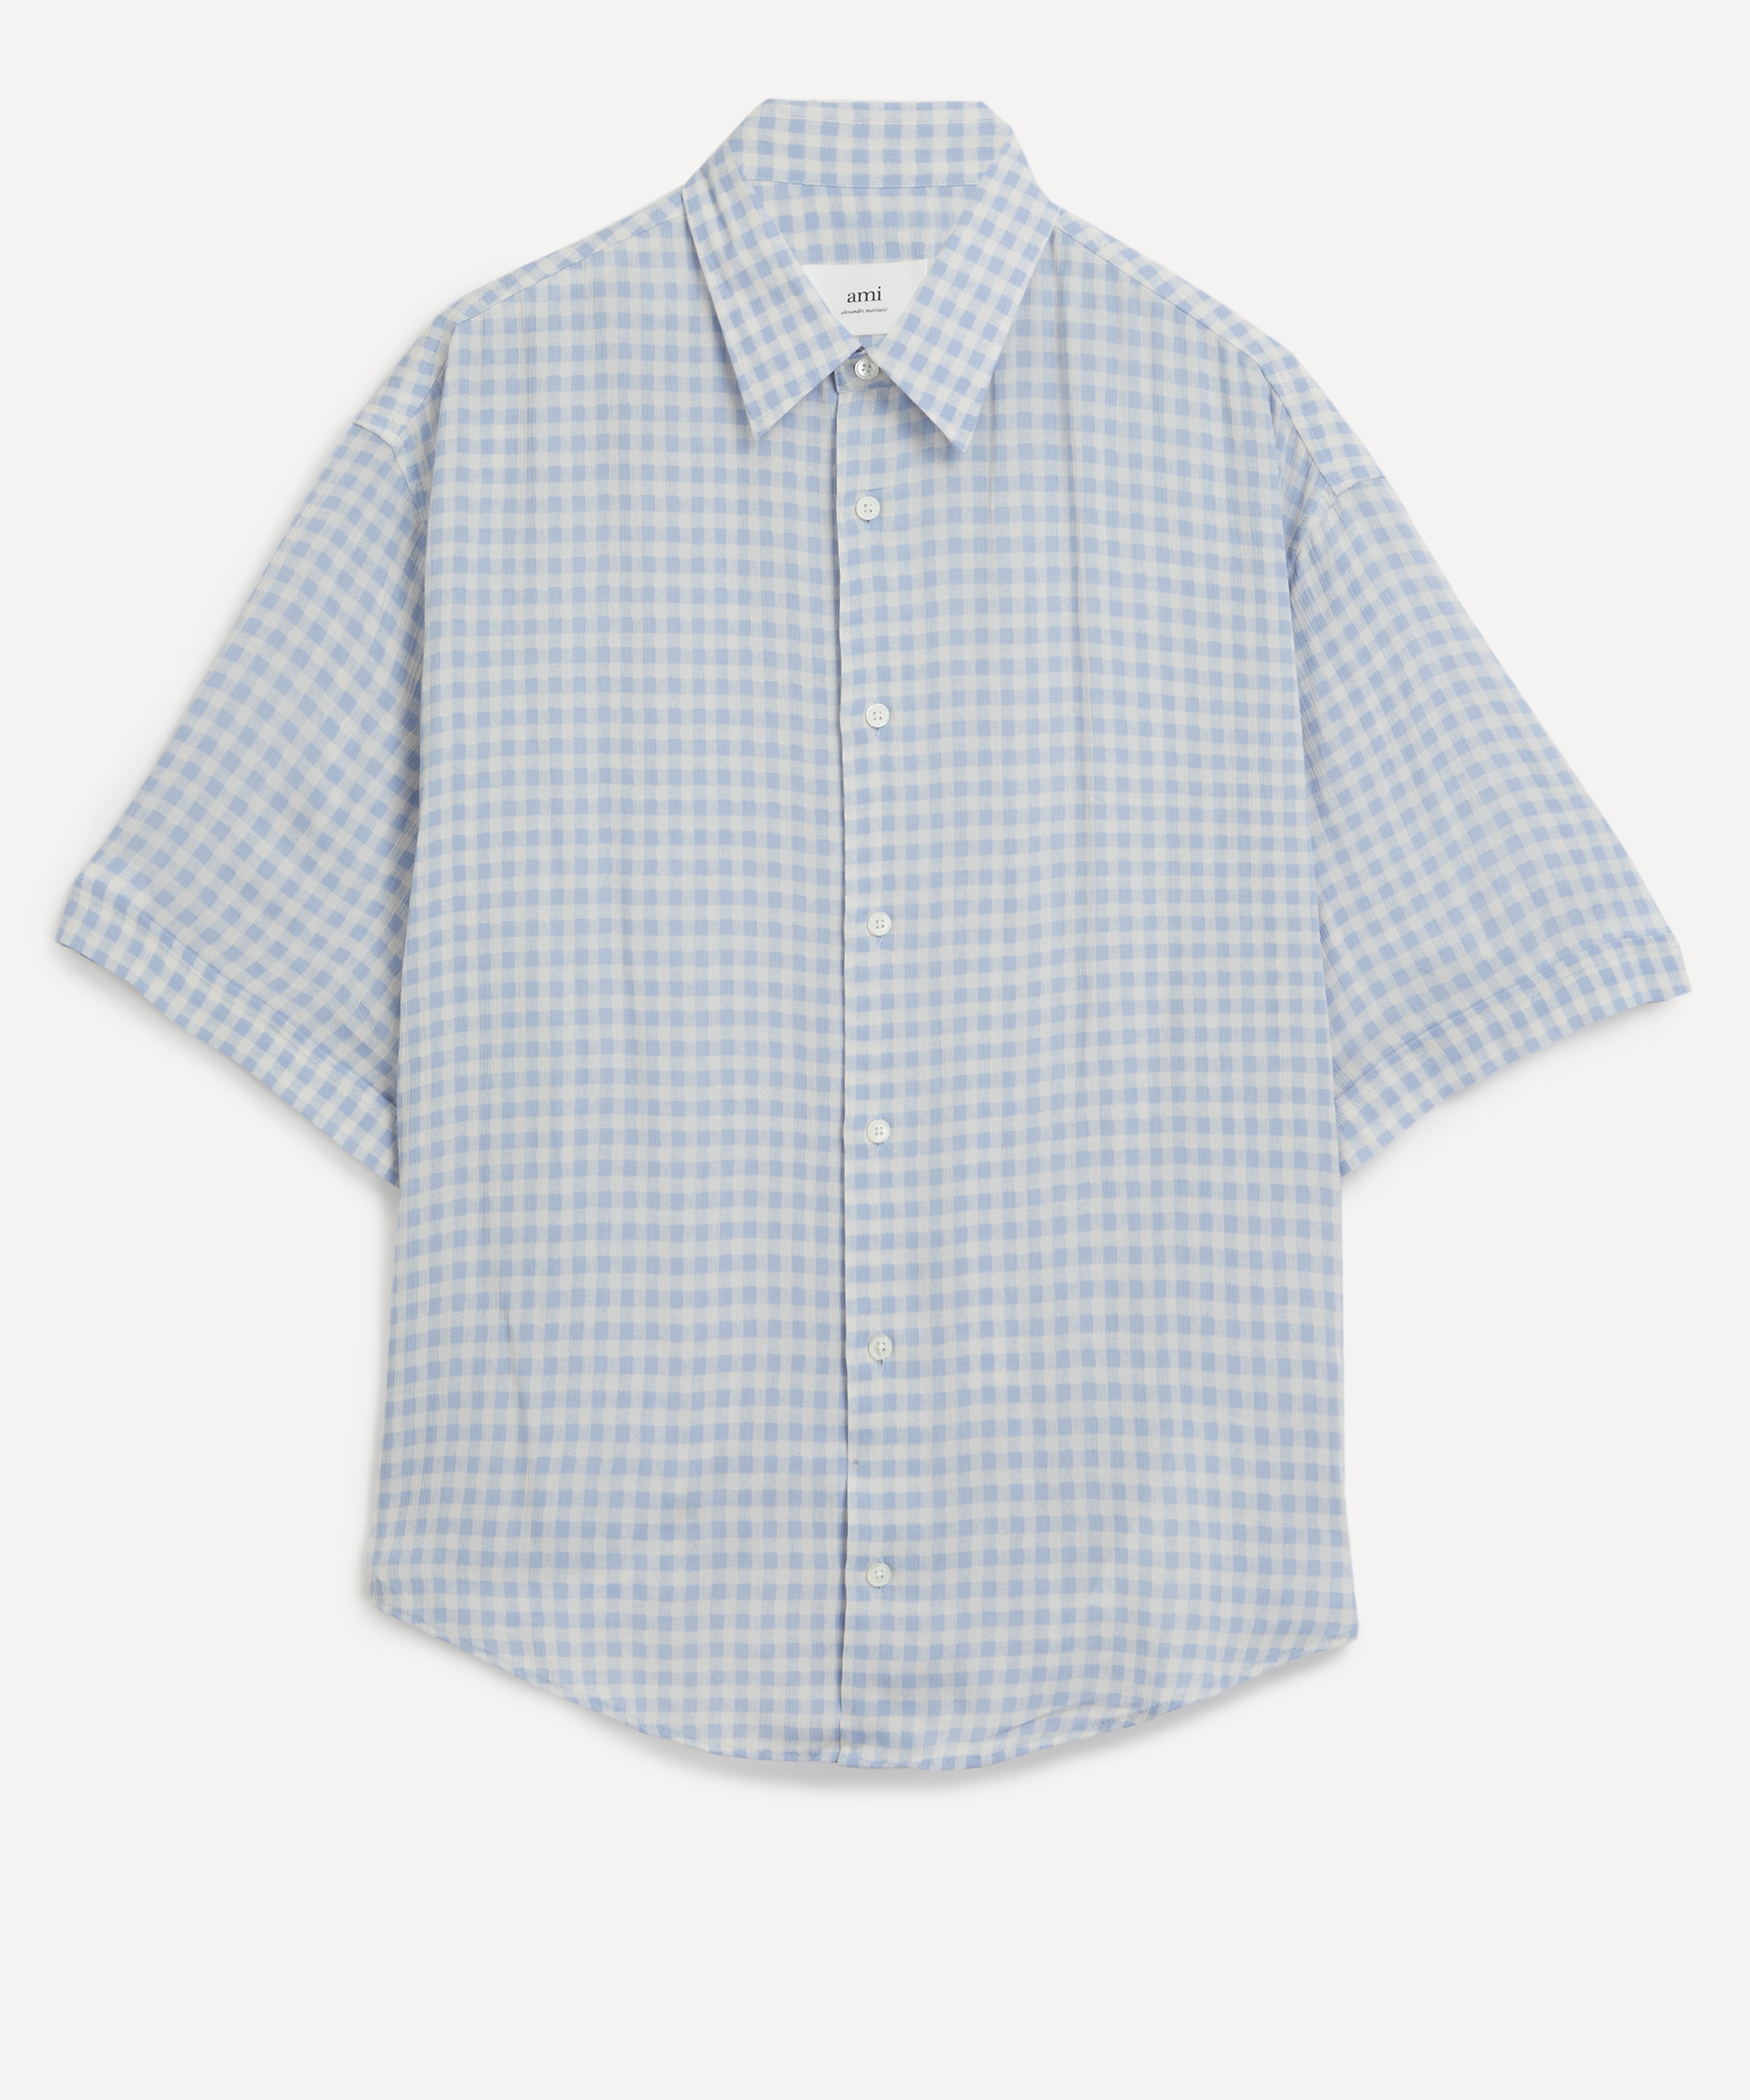 Ami - Boxy Crepe Shirt